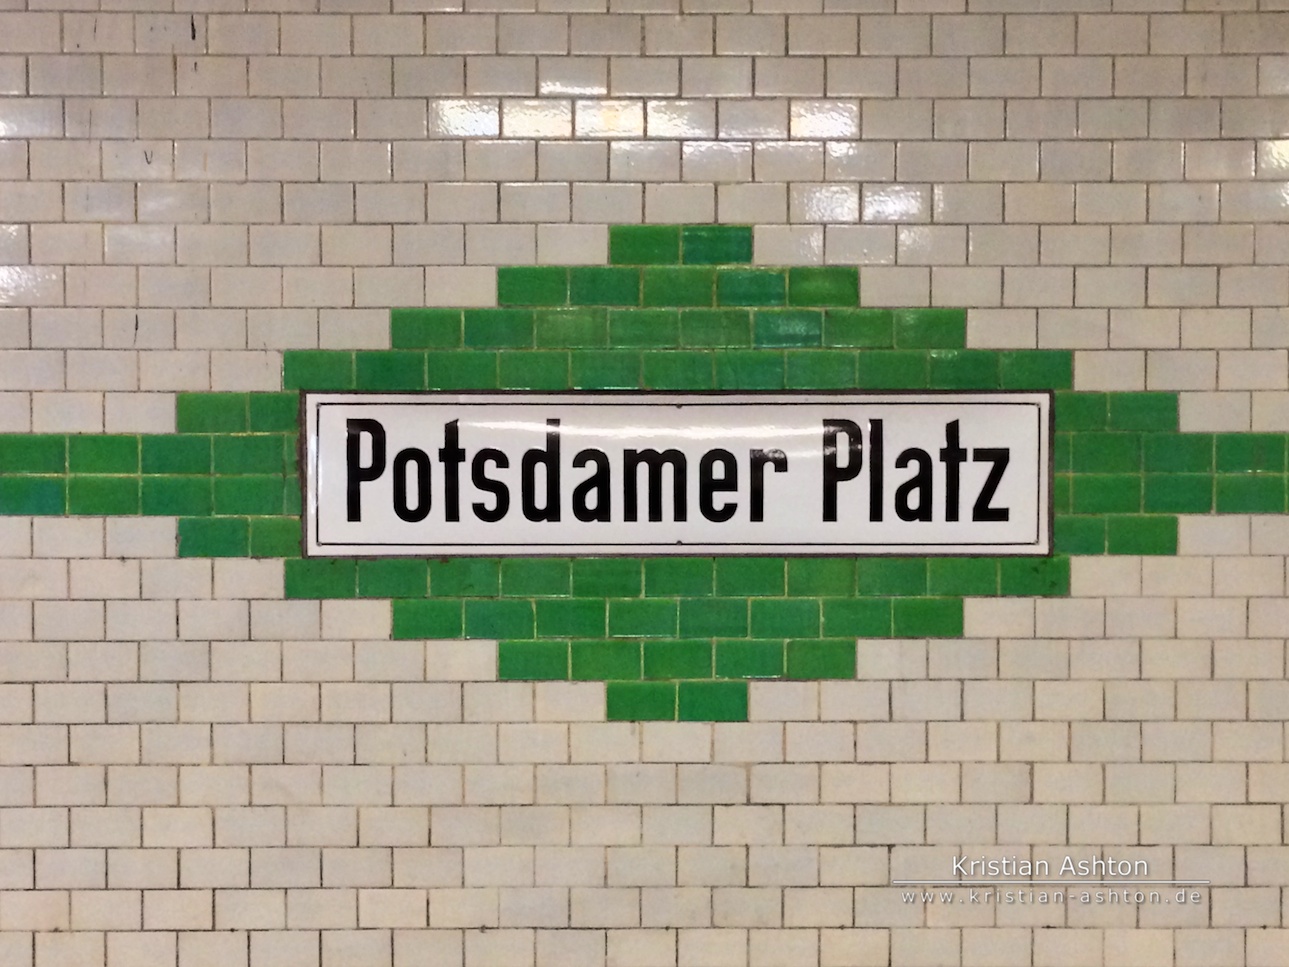 Berlin - Underground station Potsdamer Platz